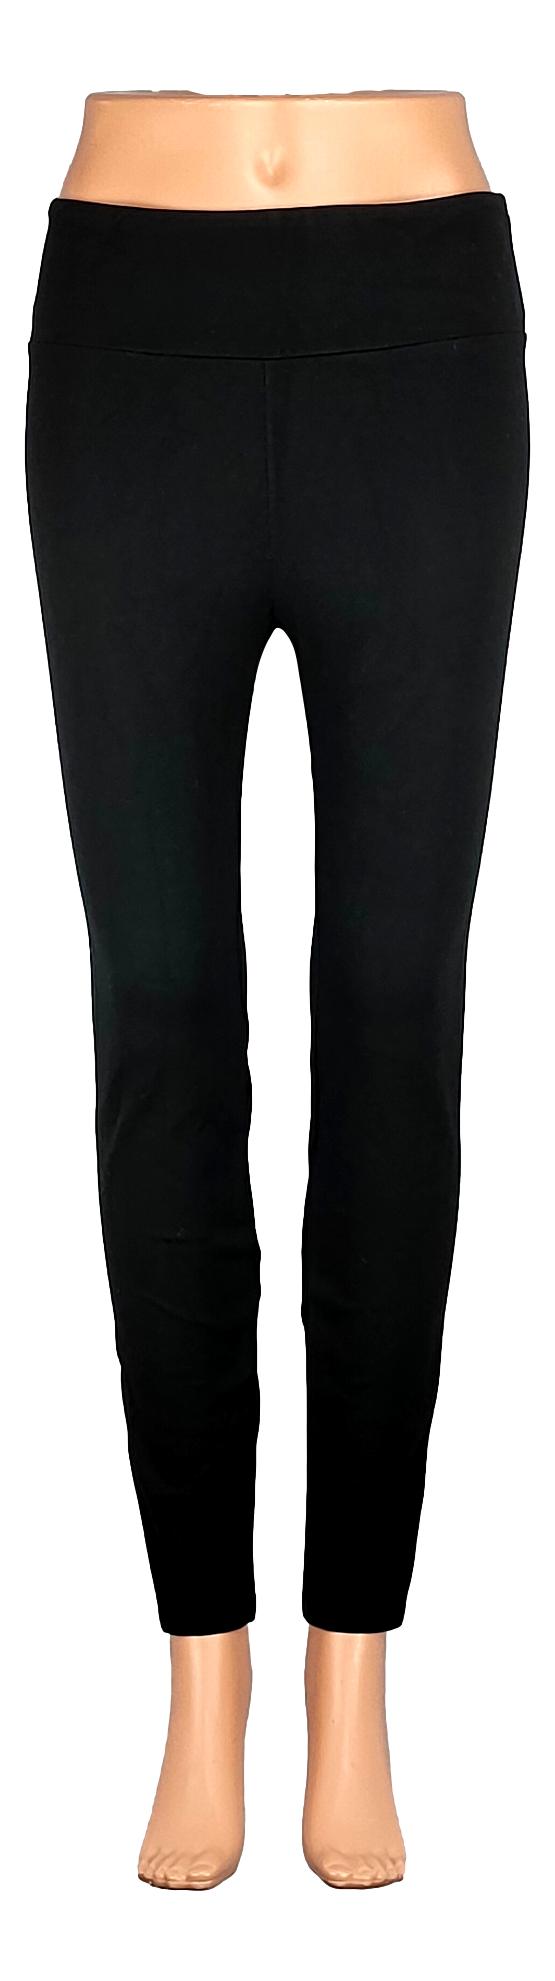 Pantalon Calzedonia - taille 36